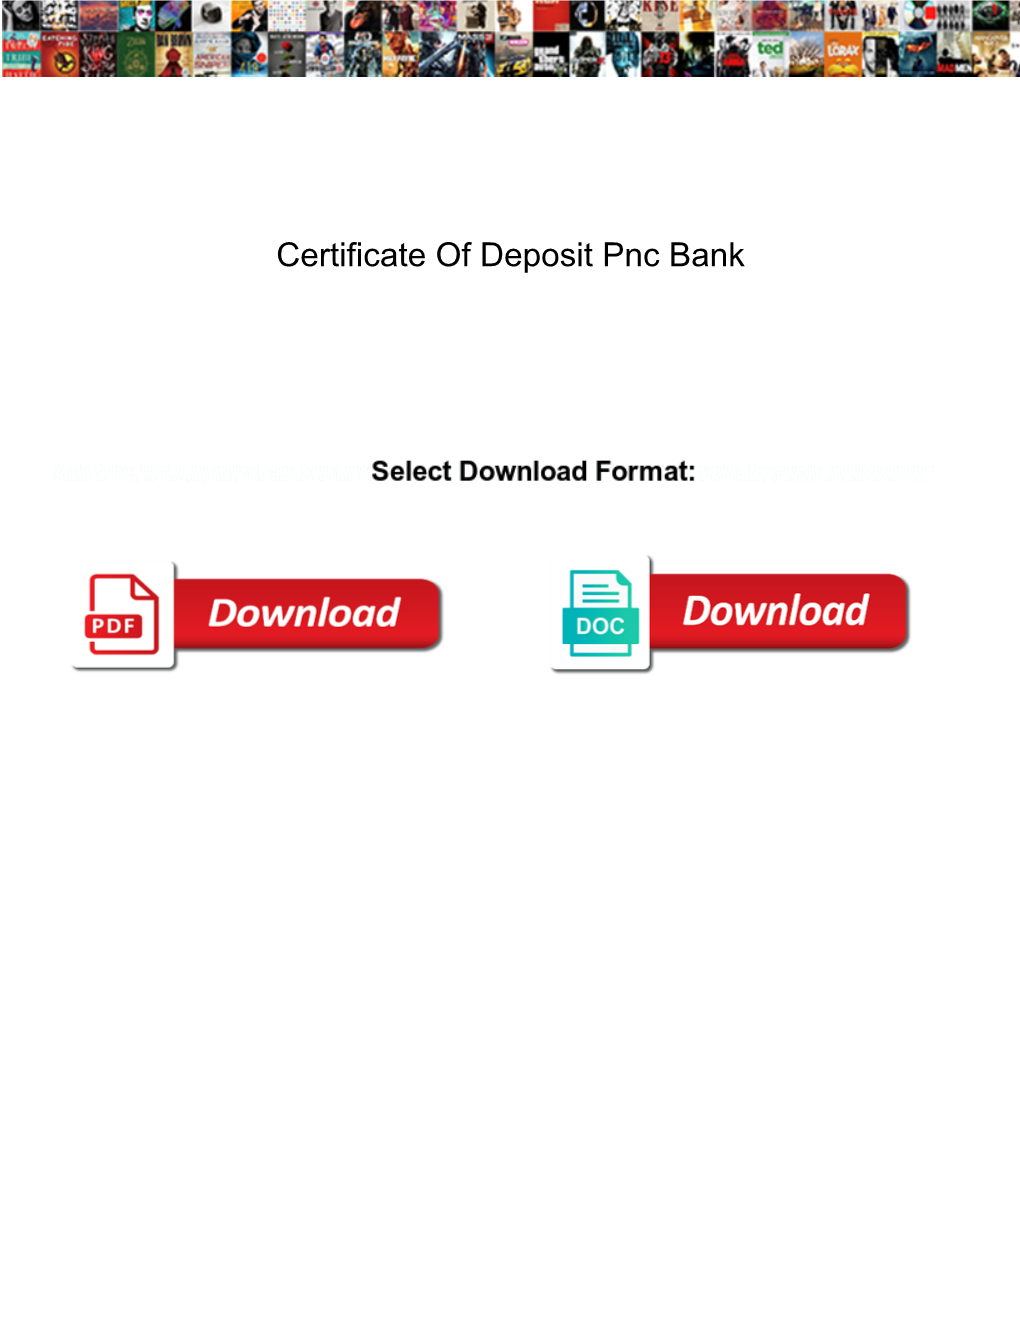 Certificate of Deposit Pnc Bank